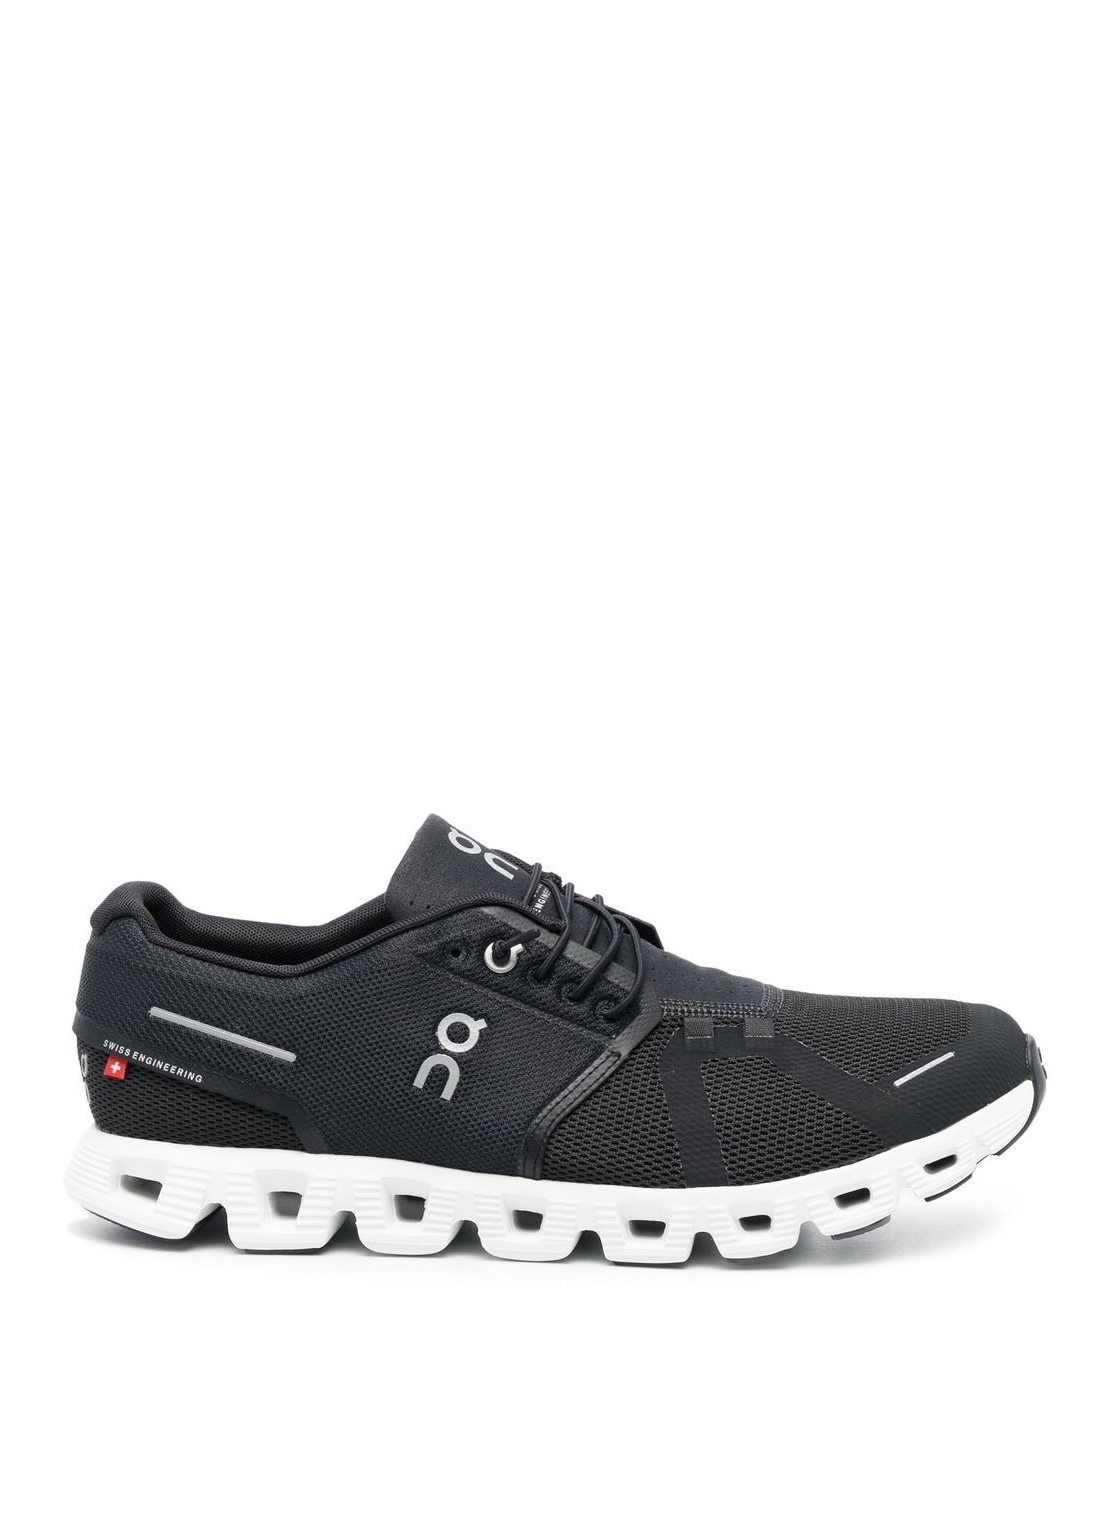 Sneaker on running sneaker man cloud 5 men 5998919 black white talla 42.5
 